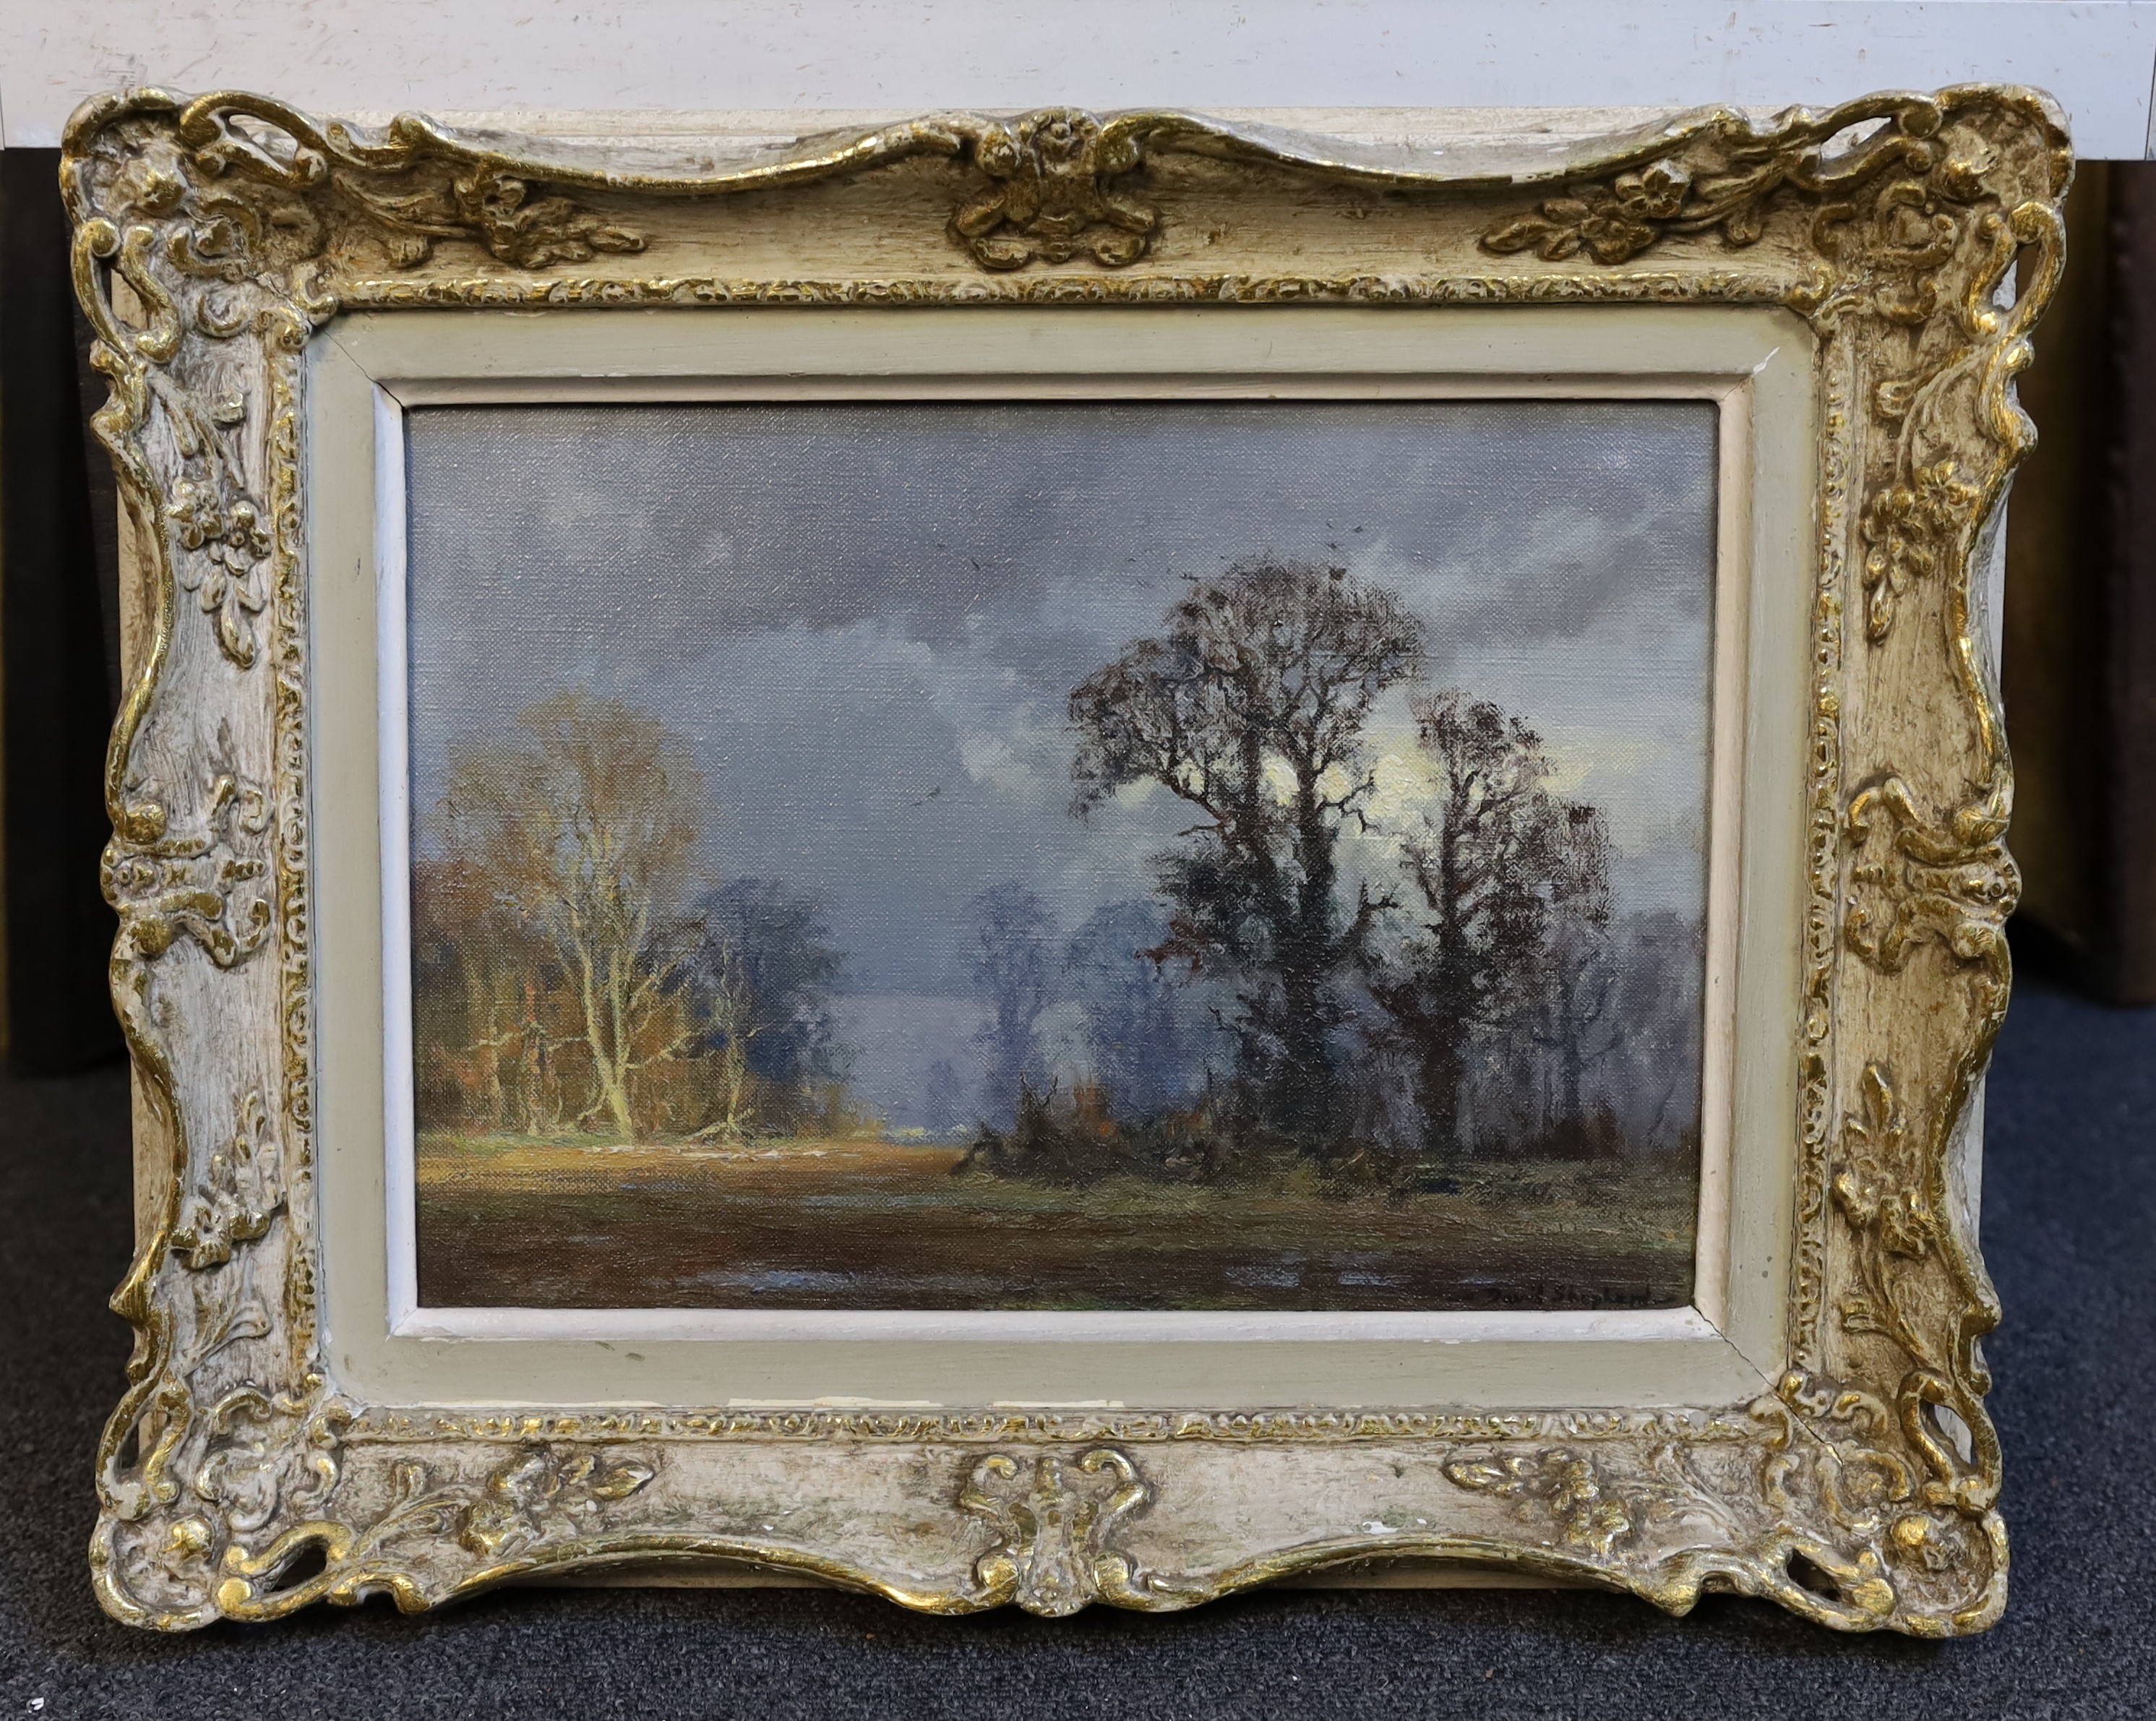 David Shepherd O.B.E. (British, 1931-2017), 'Rainy afternoon', oil on canvas, 25 x 36cm